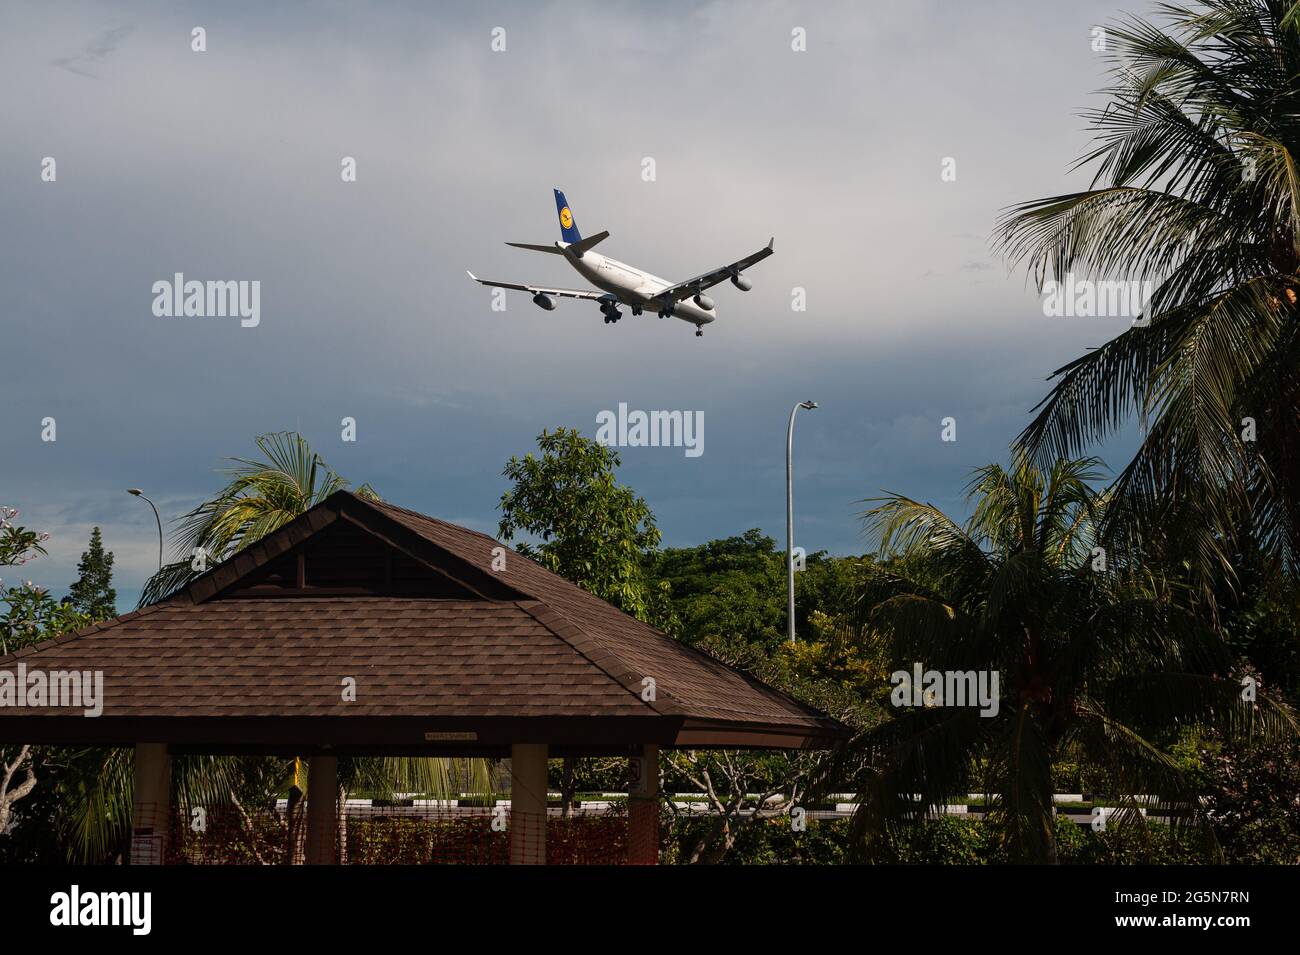 23.06.2021, Singapore, Republic of Singapore, Asia - A Lufthansa Airbus A340-300 passenger jet approaches Changi Airport for landing. Stock Photo